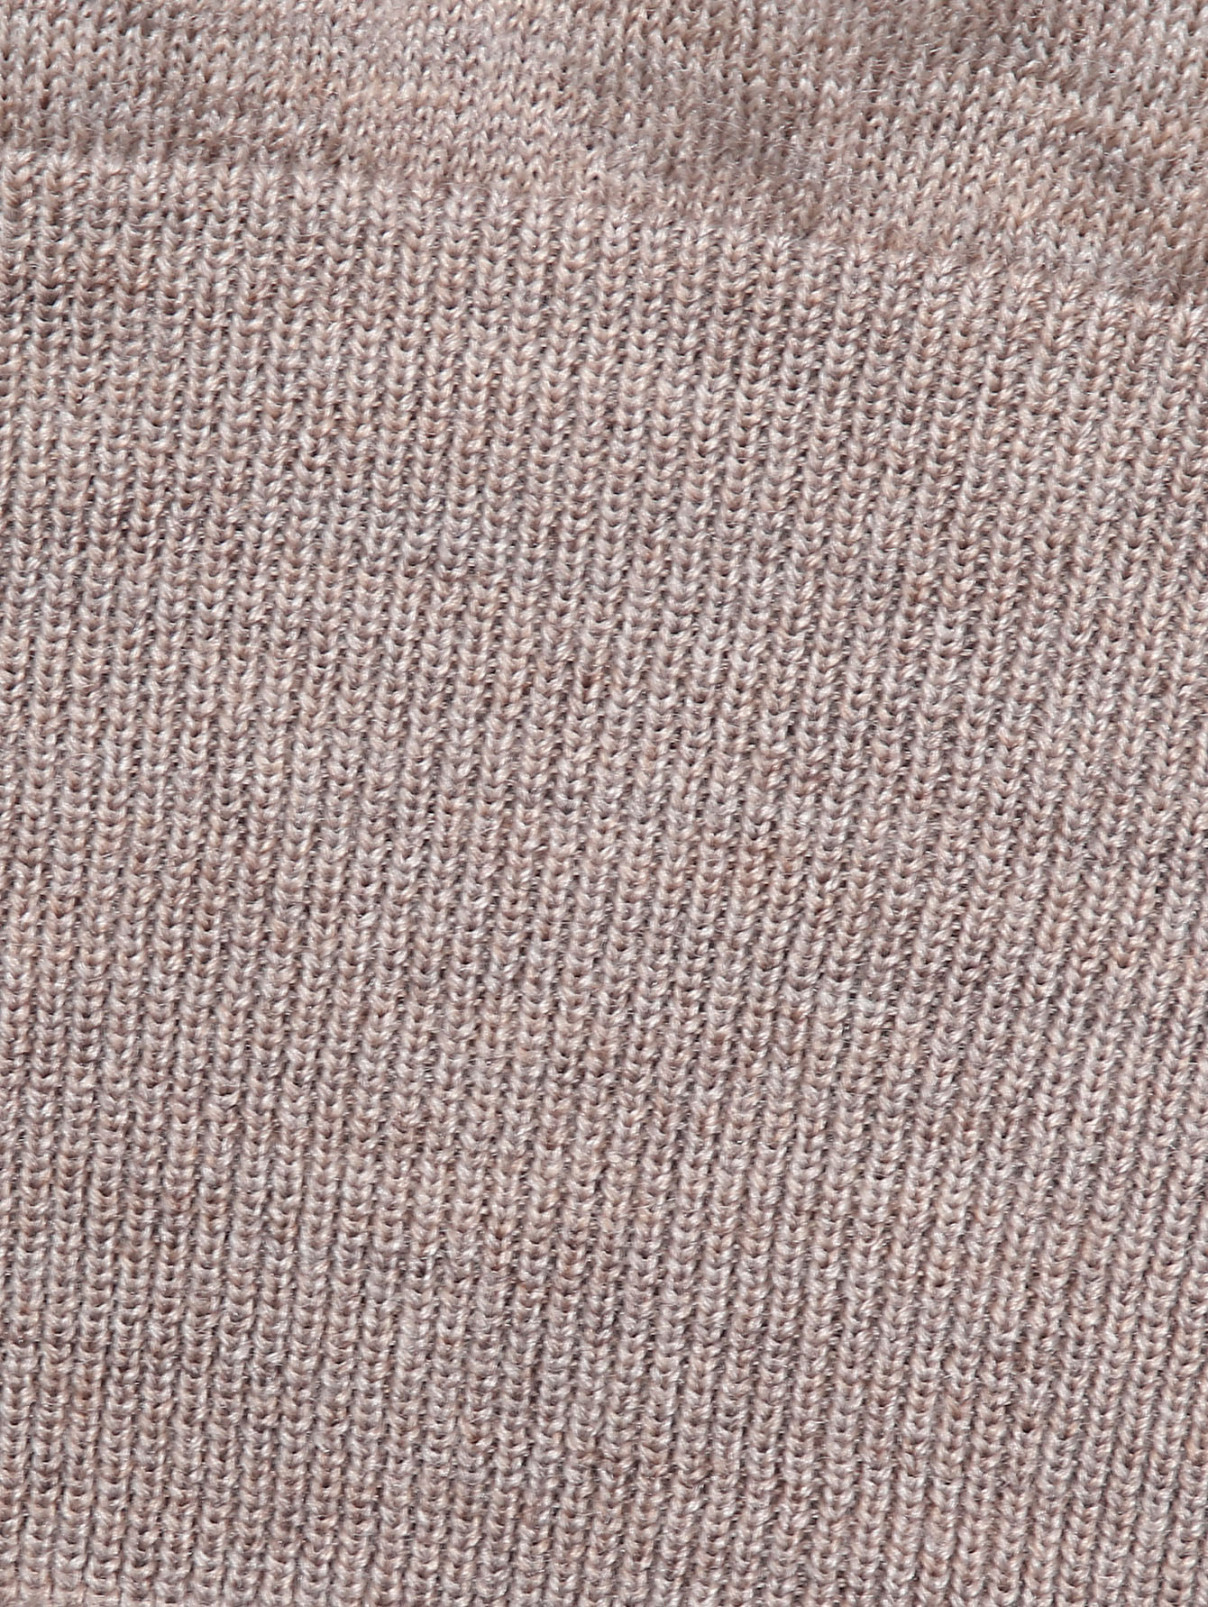 Джемпер из шерсти и шелка Piacenza Cashmere  –  Деталь  – Цвет:  Бежевый